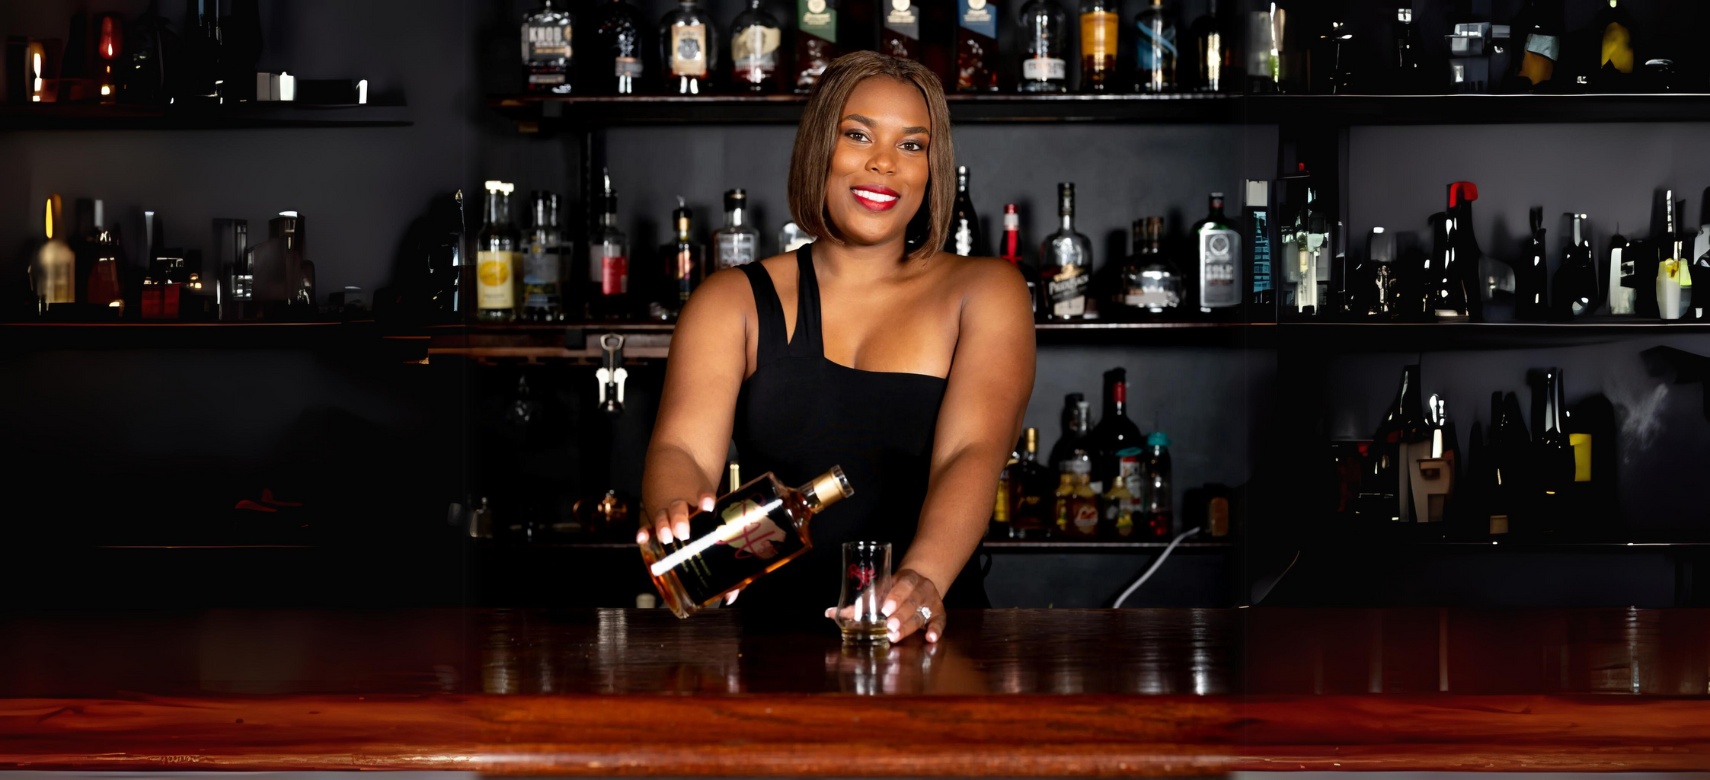 Photo for: Red Hazel Spiced Whiskey Impressive Win at Bartender Spirits Awards